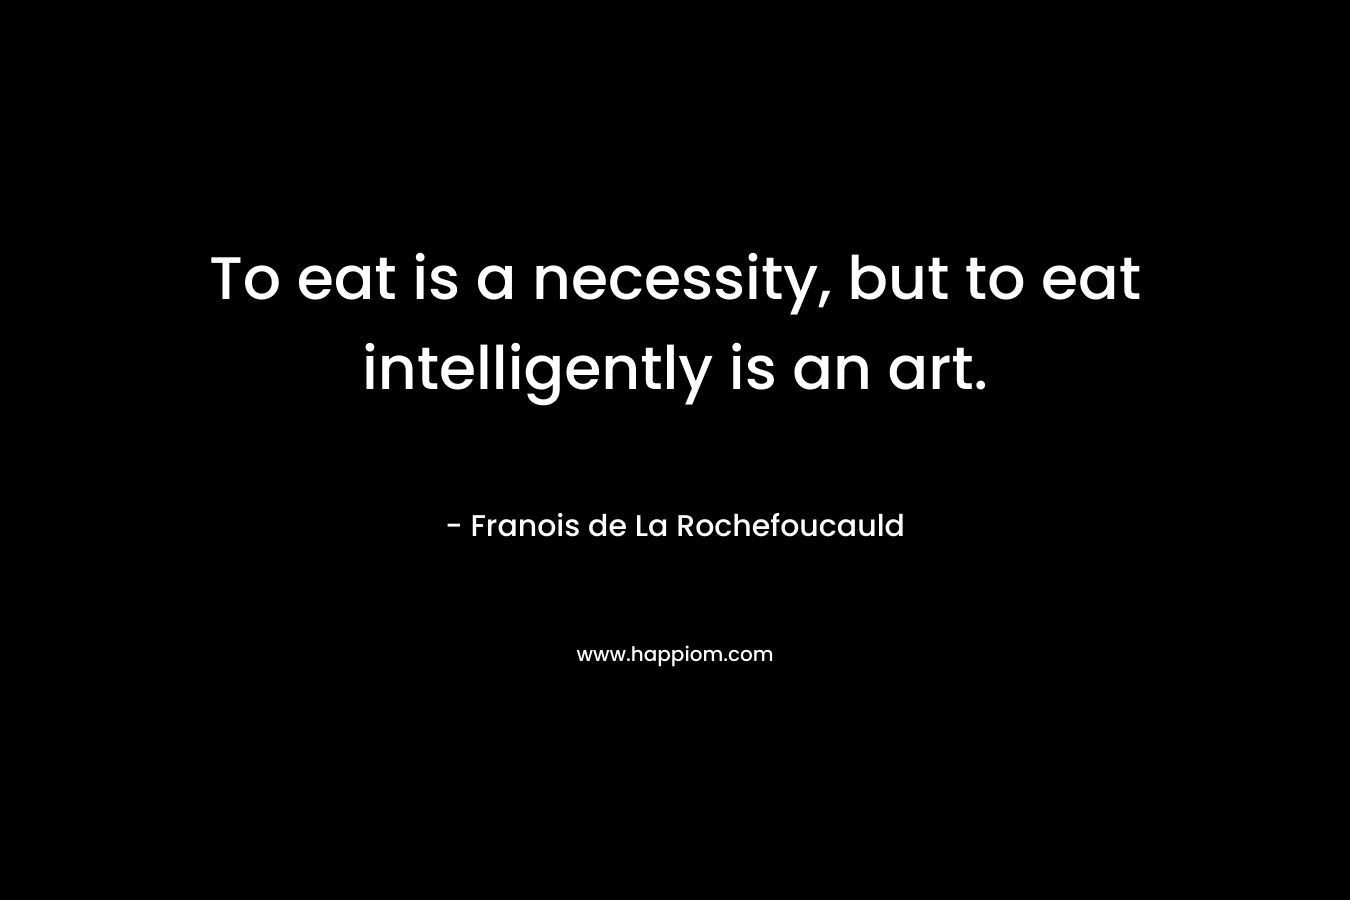 To eat is a necessity, but to eat intelligently is an art. – Franois de La Rochefoucauld